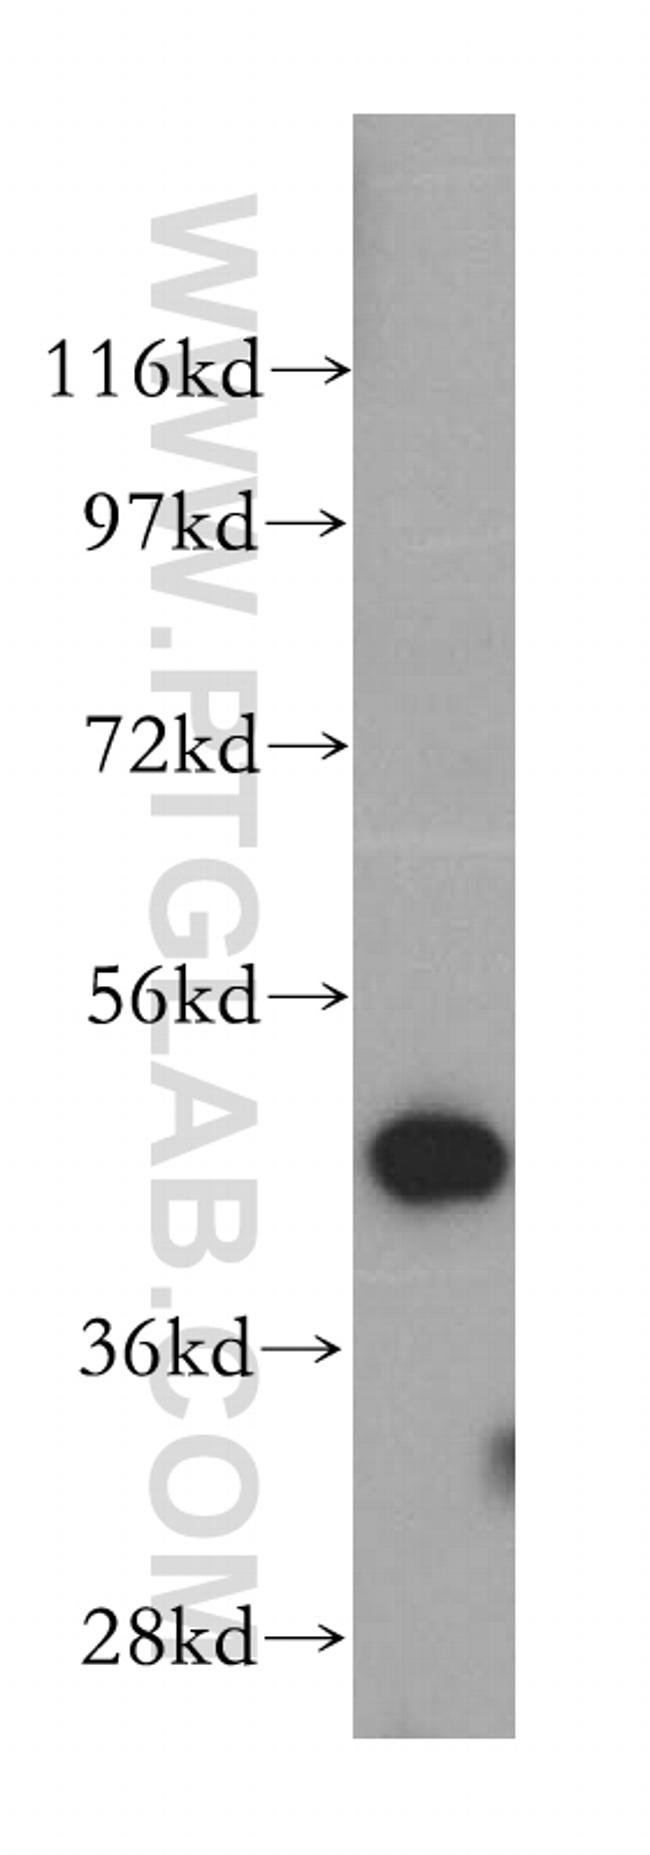 SNX5 Antibody in Western Blot (WB)